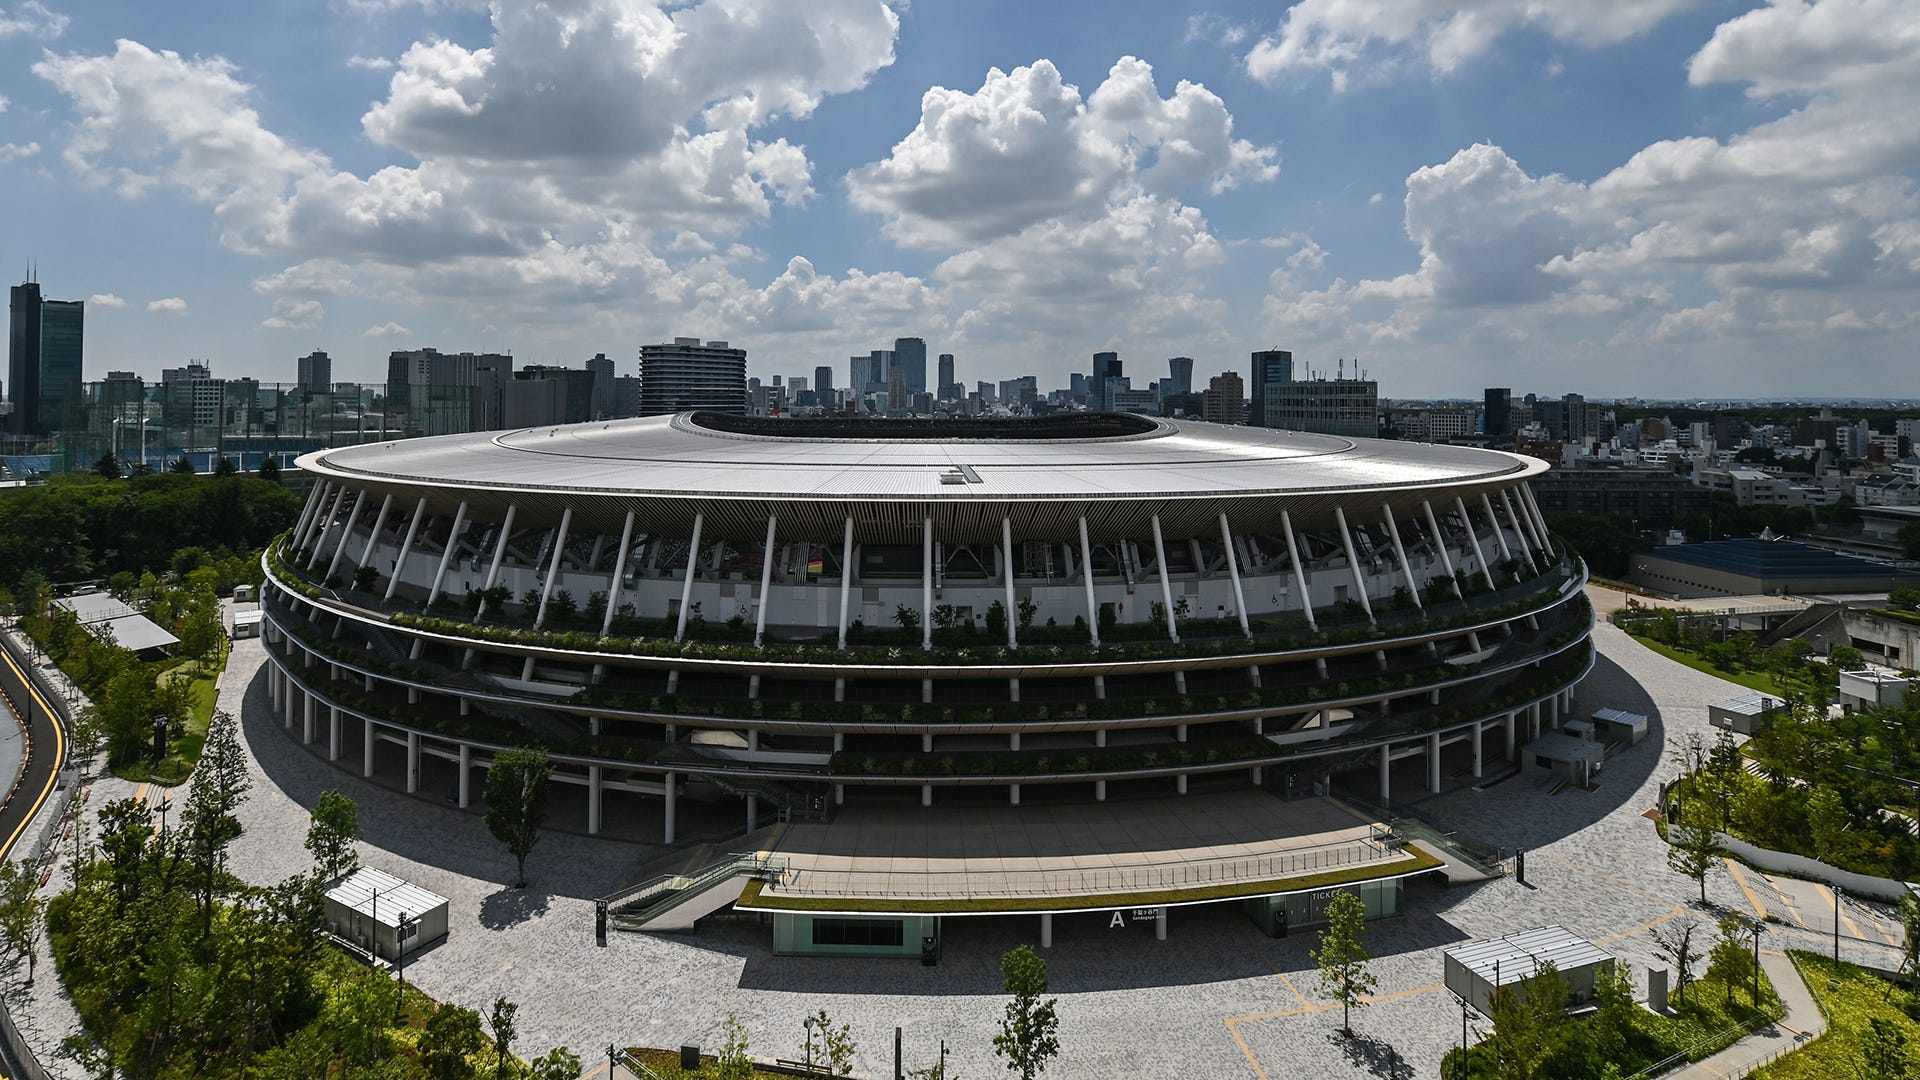 Jfaが天皇杯 全国高校サッカー選手権のチケット販売を中止 政府の方針を受け決断 Goal Com 日本